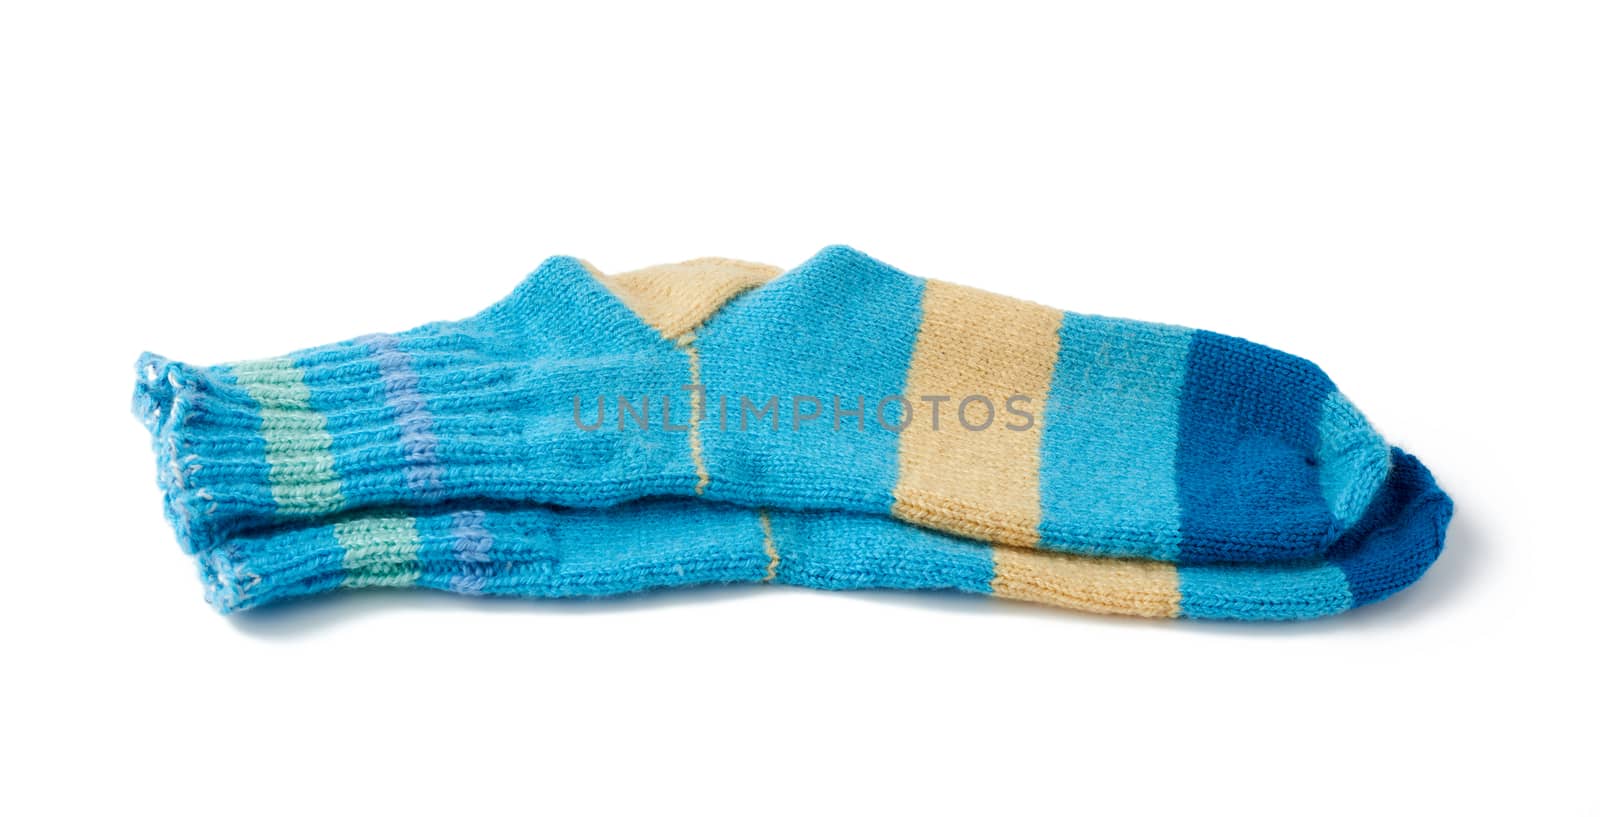 pair of striped handmade knitted warm socks made of sheep’s wo by ndanko